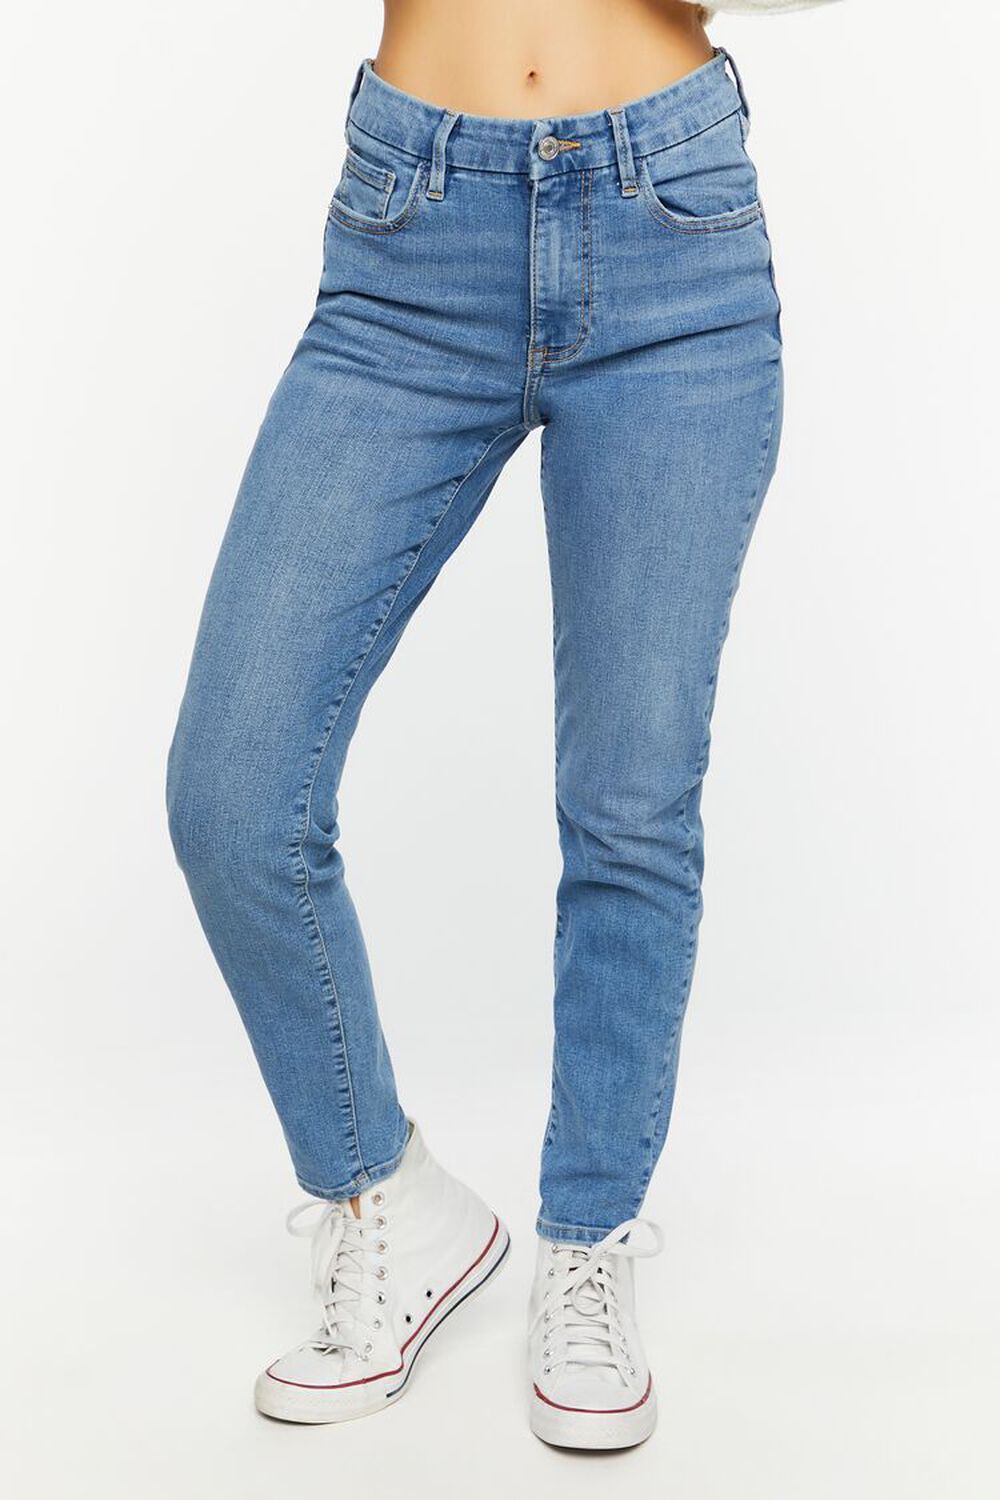 MEDIUM DENIM Recycled Cotton Mid-Rise Skinny Jeans, image 1